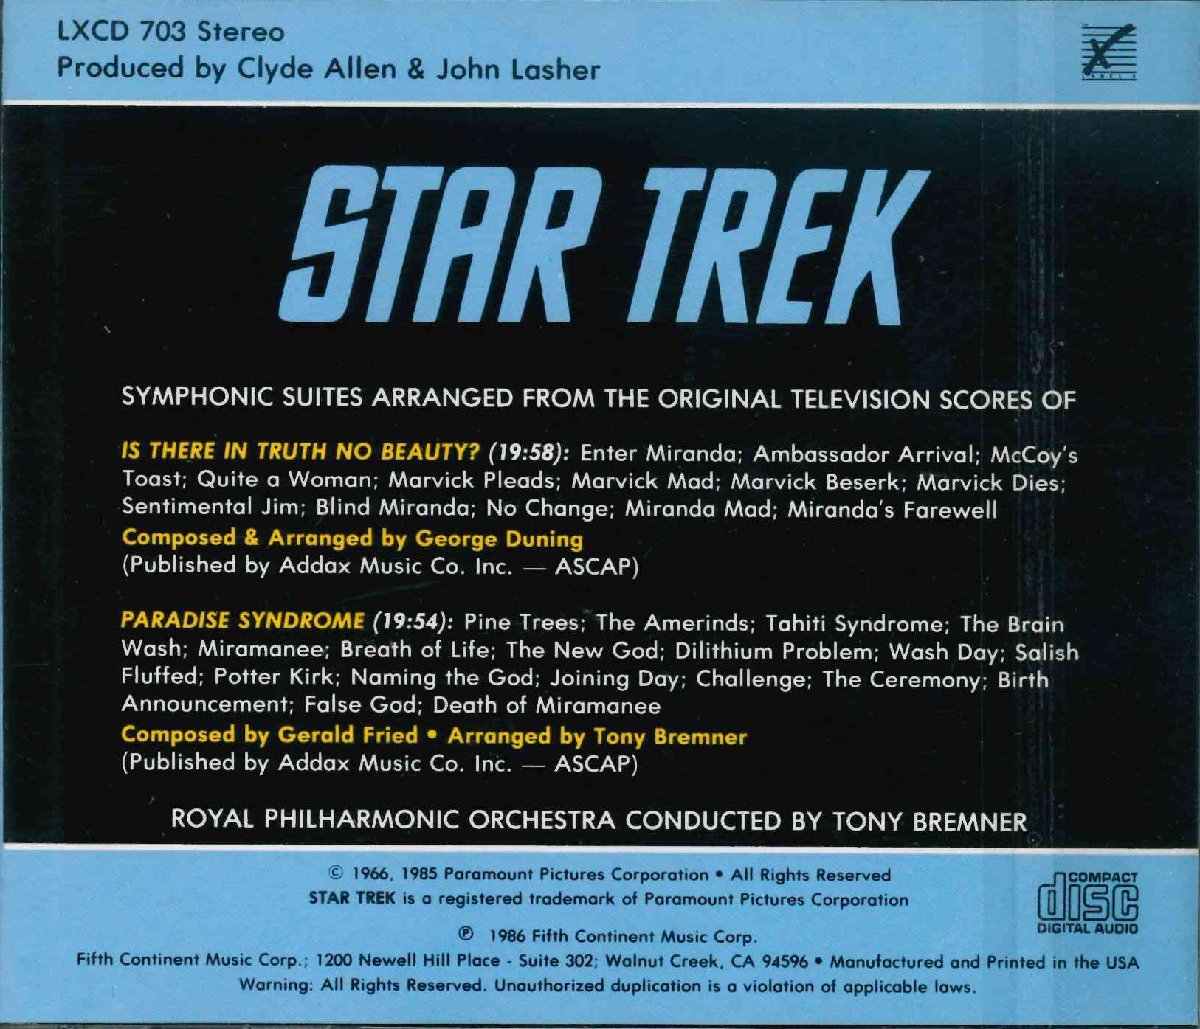 [CD］STAR TREK Symphonic Suites Arranged from the Original TV Scores-Volume 1[輸入盤] LXCD703 [S600425]_画像2